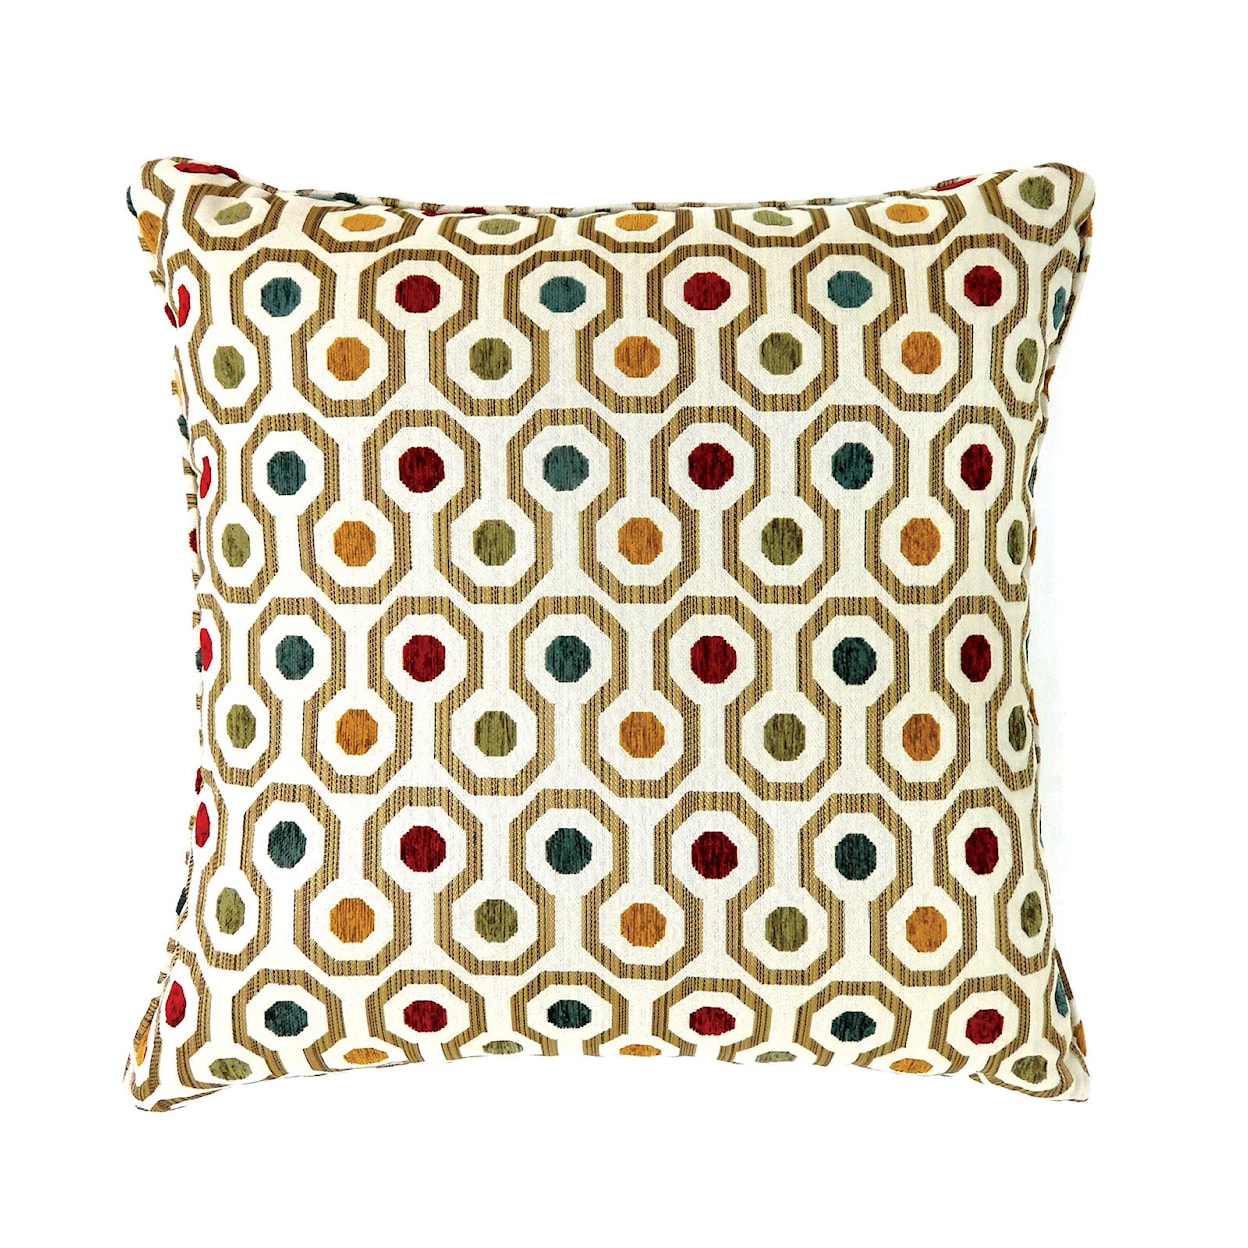 Furniture of America Dott Accent Pillow